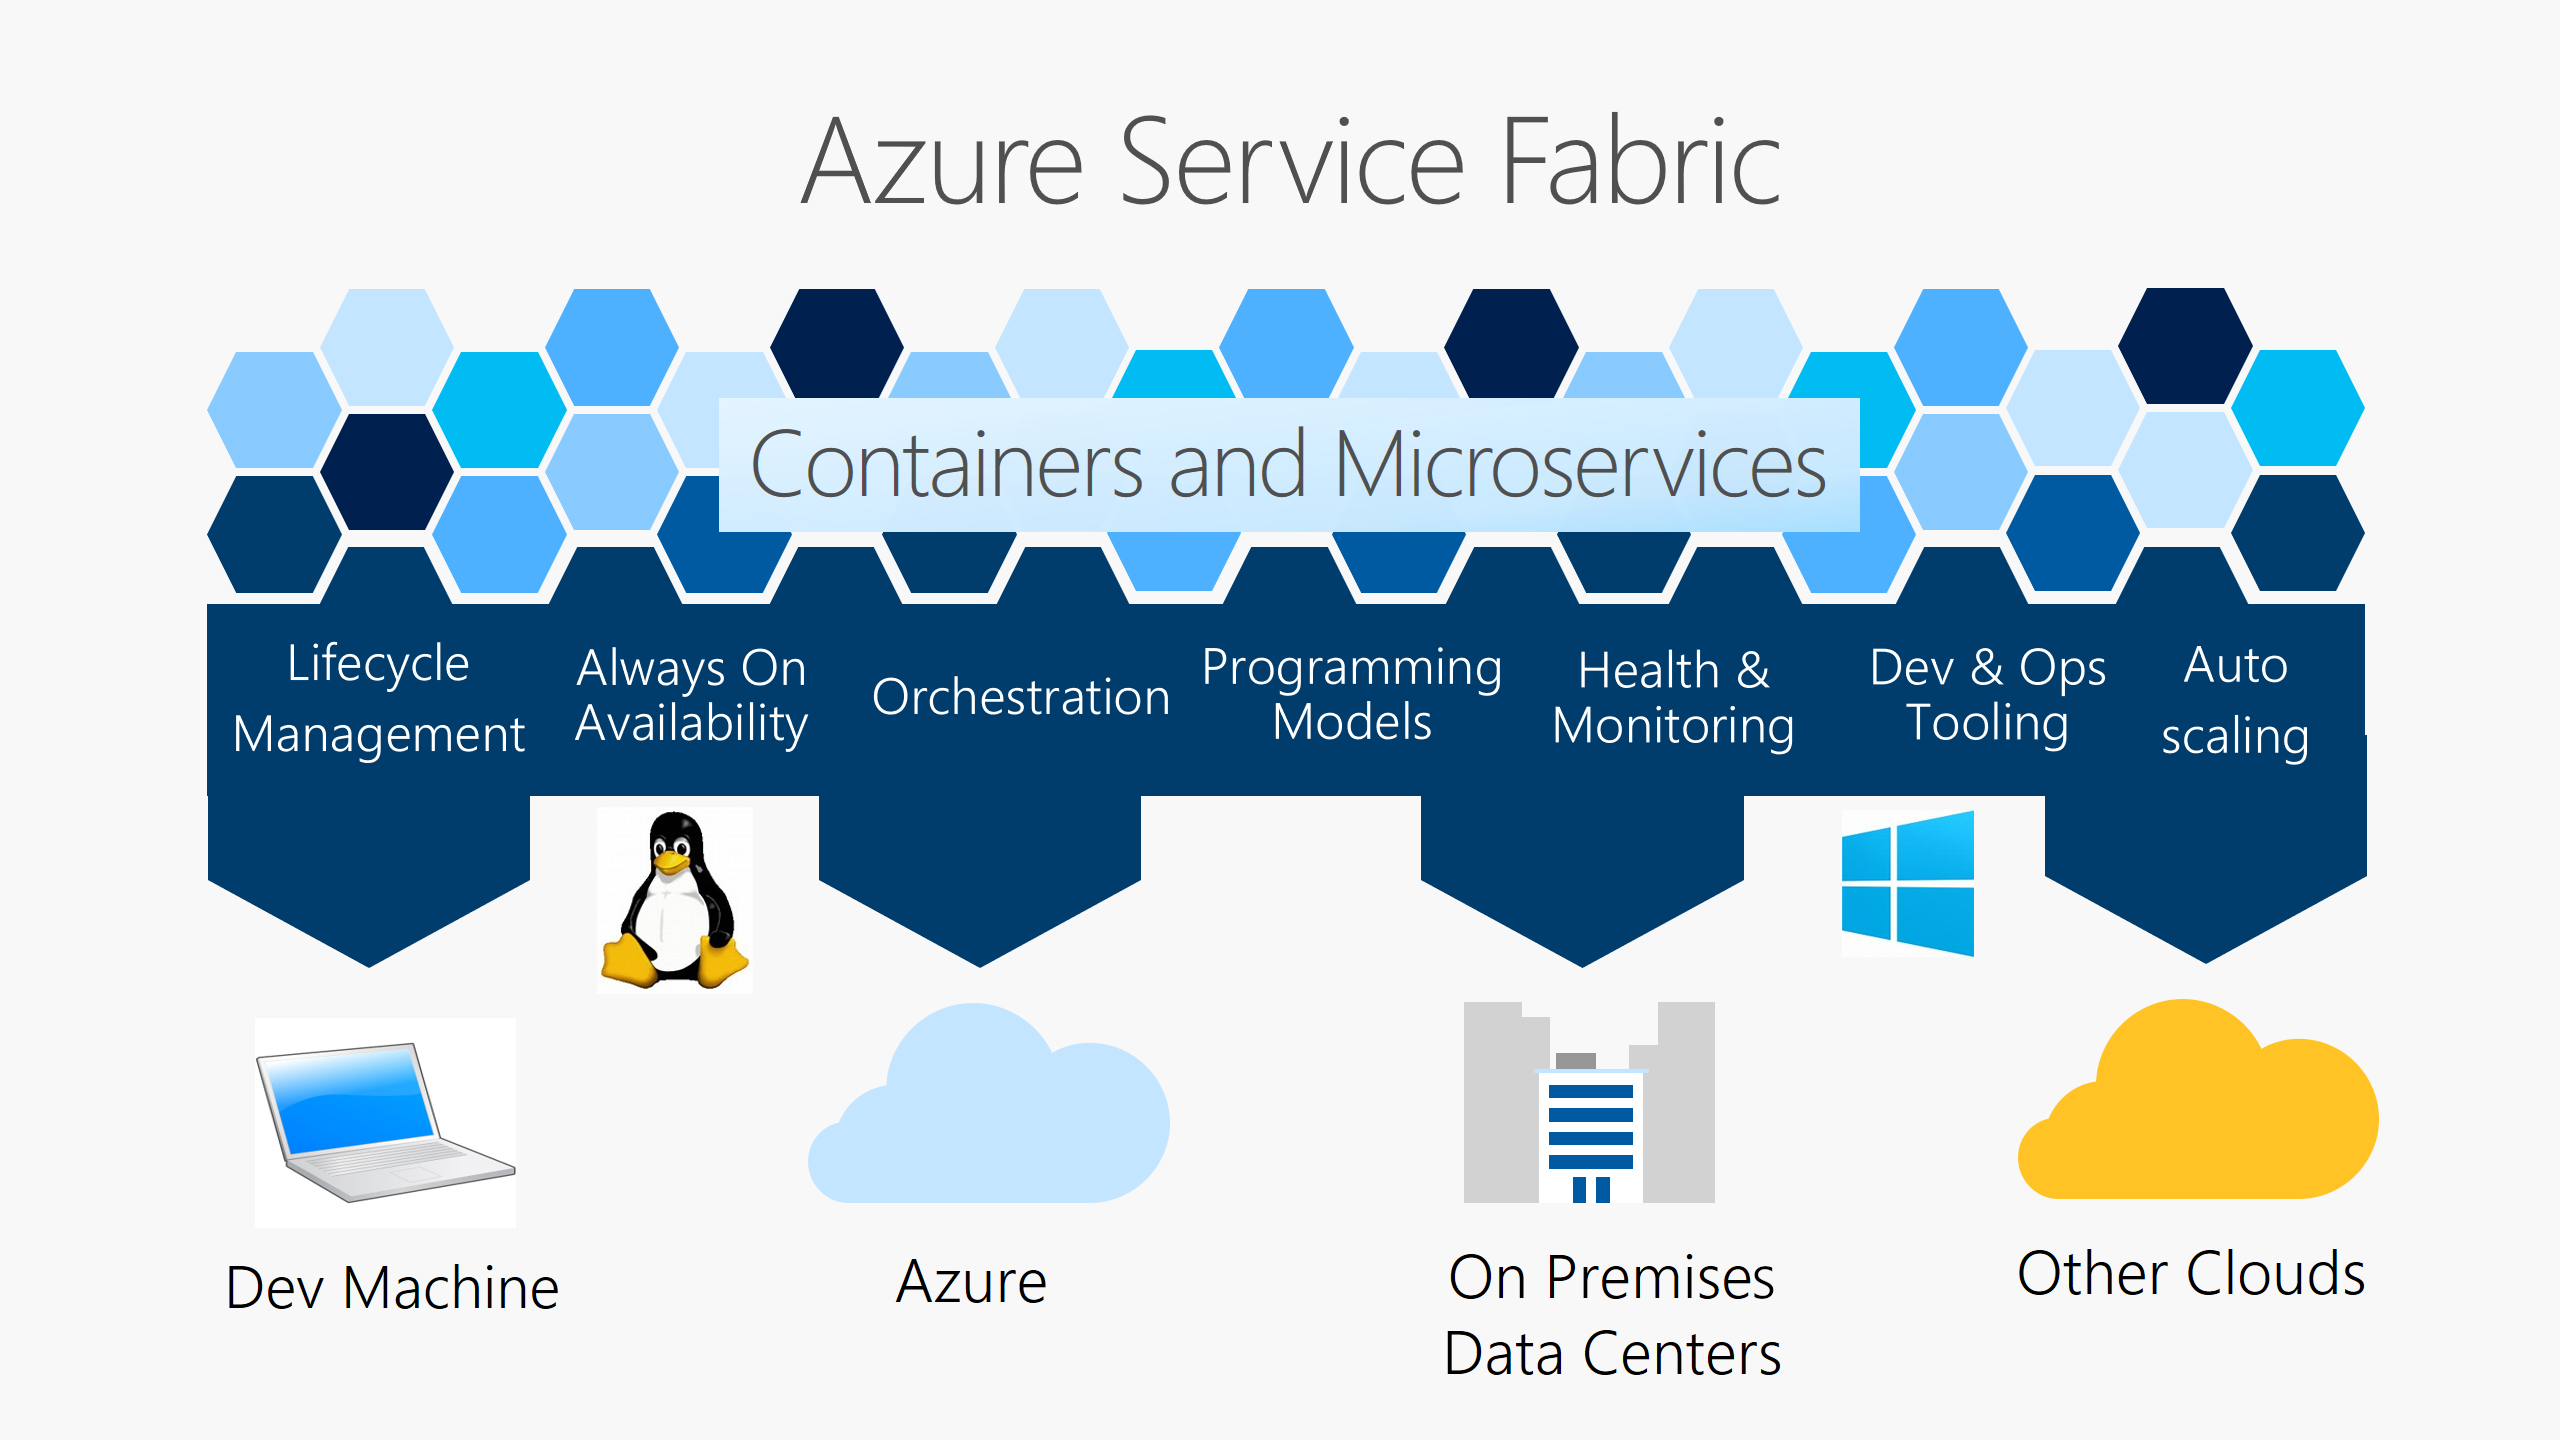 Azure Service Fabric: The Backbone of Modern Application Development